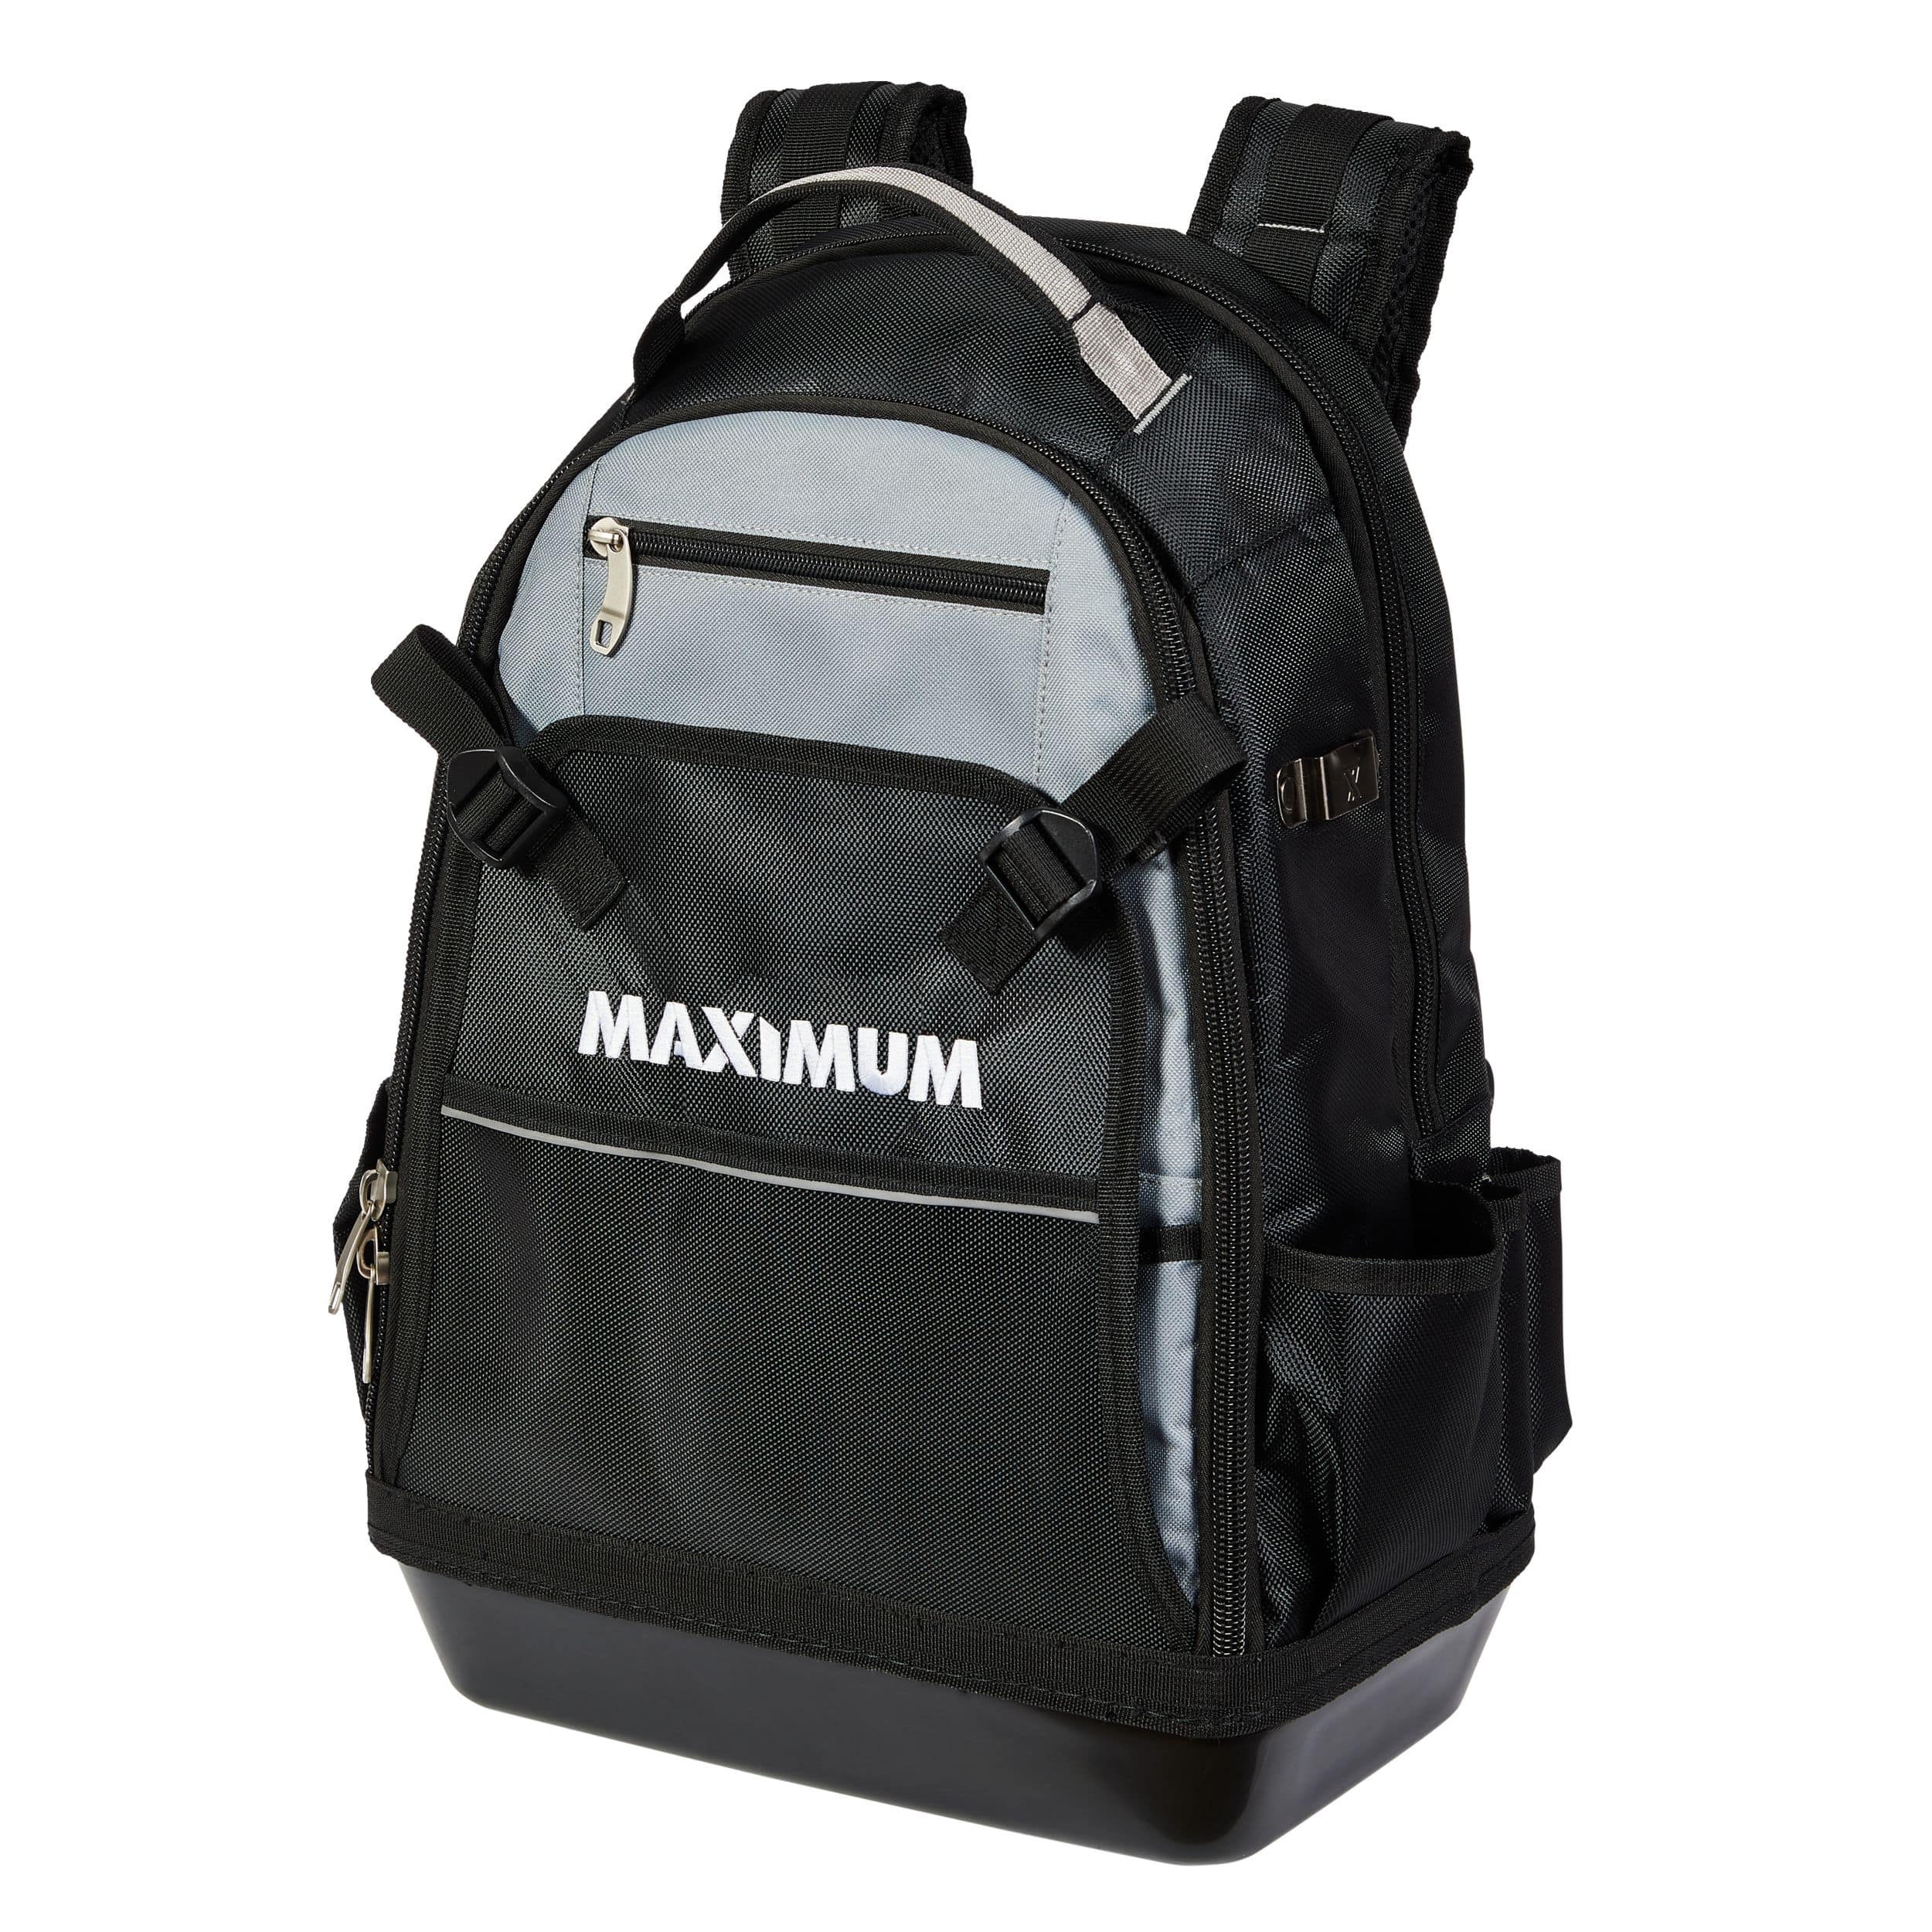 MAXIMUM Water Resistant Bottom Backpack Tool Bag, Black & Grey, 35 Pockets,  15x20-in